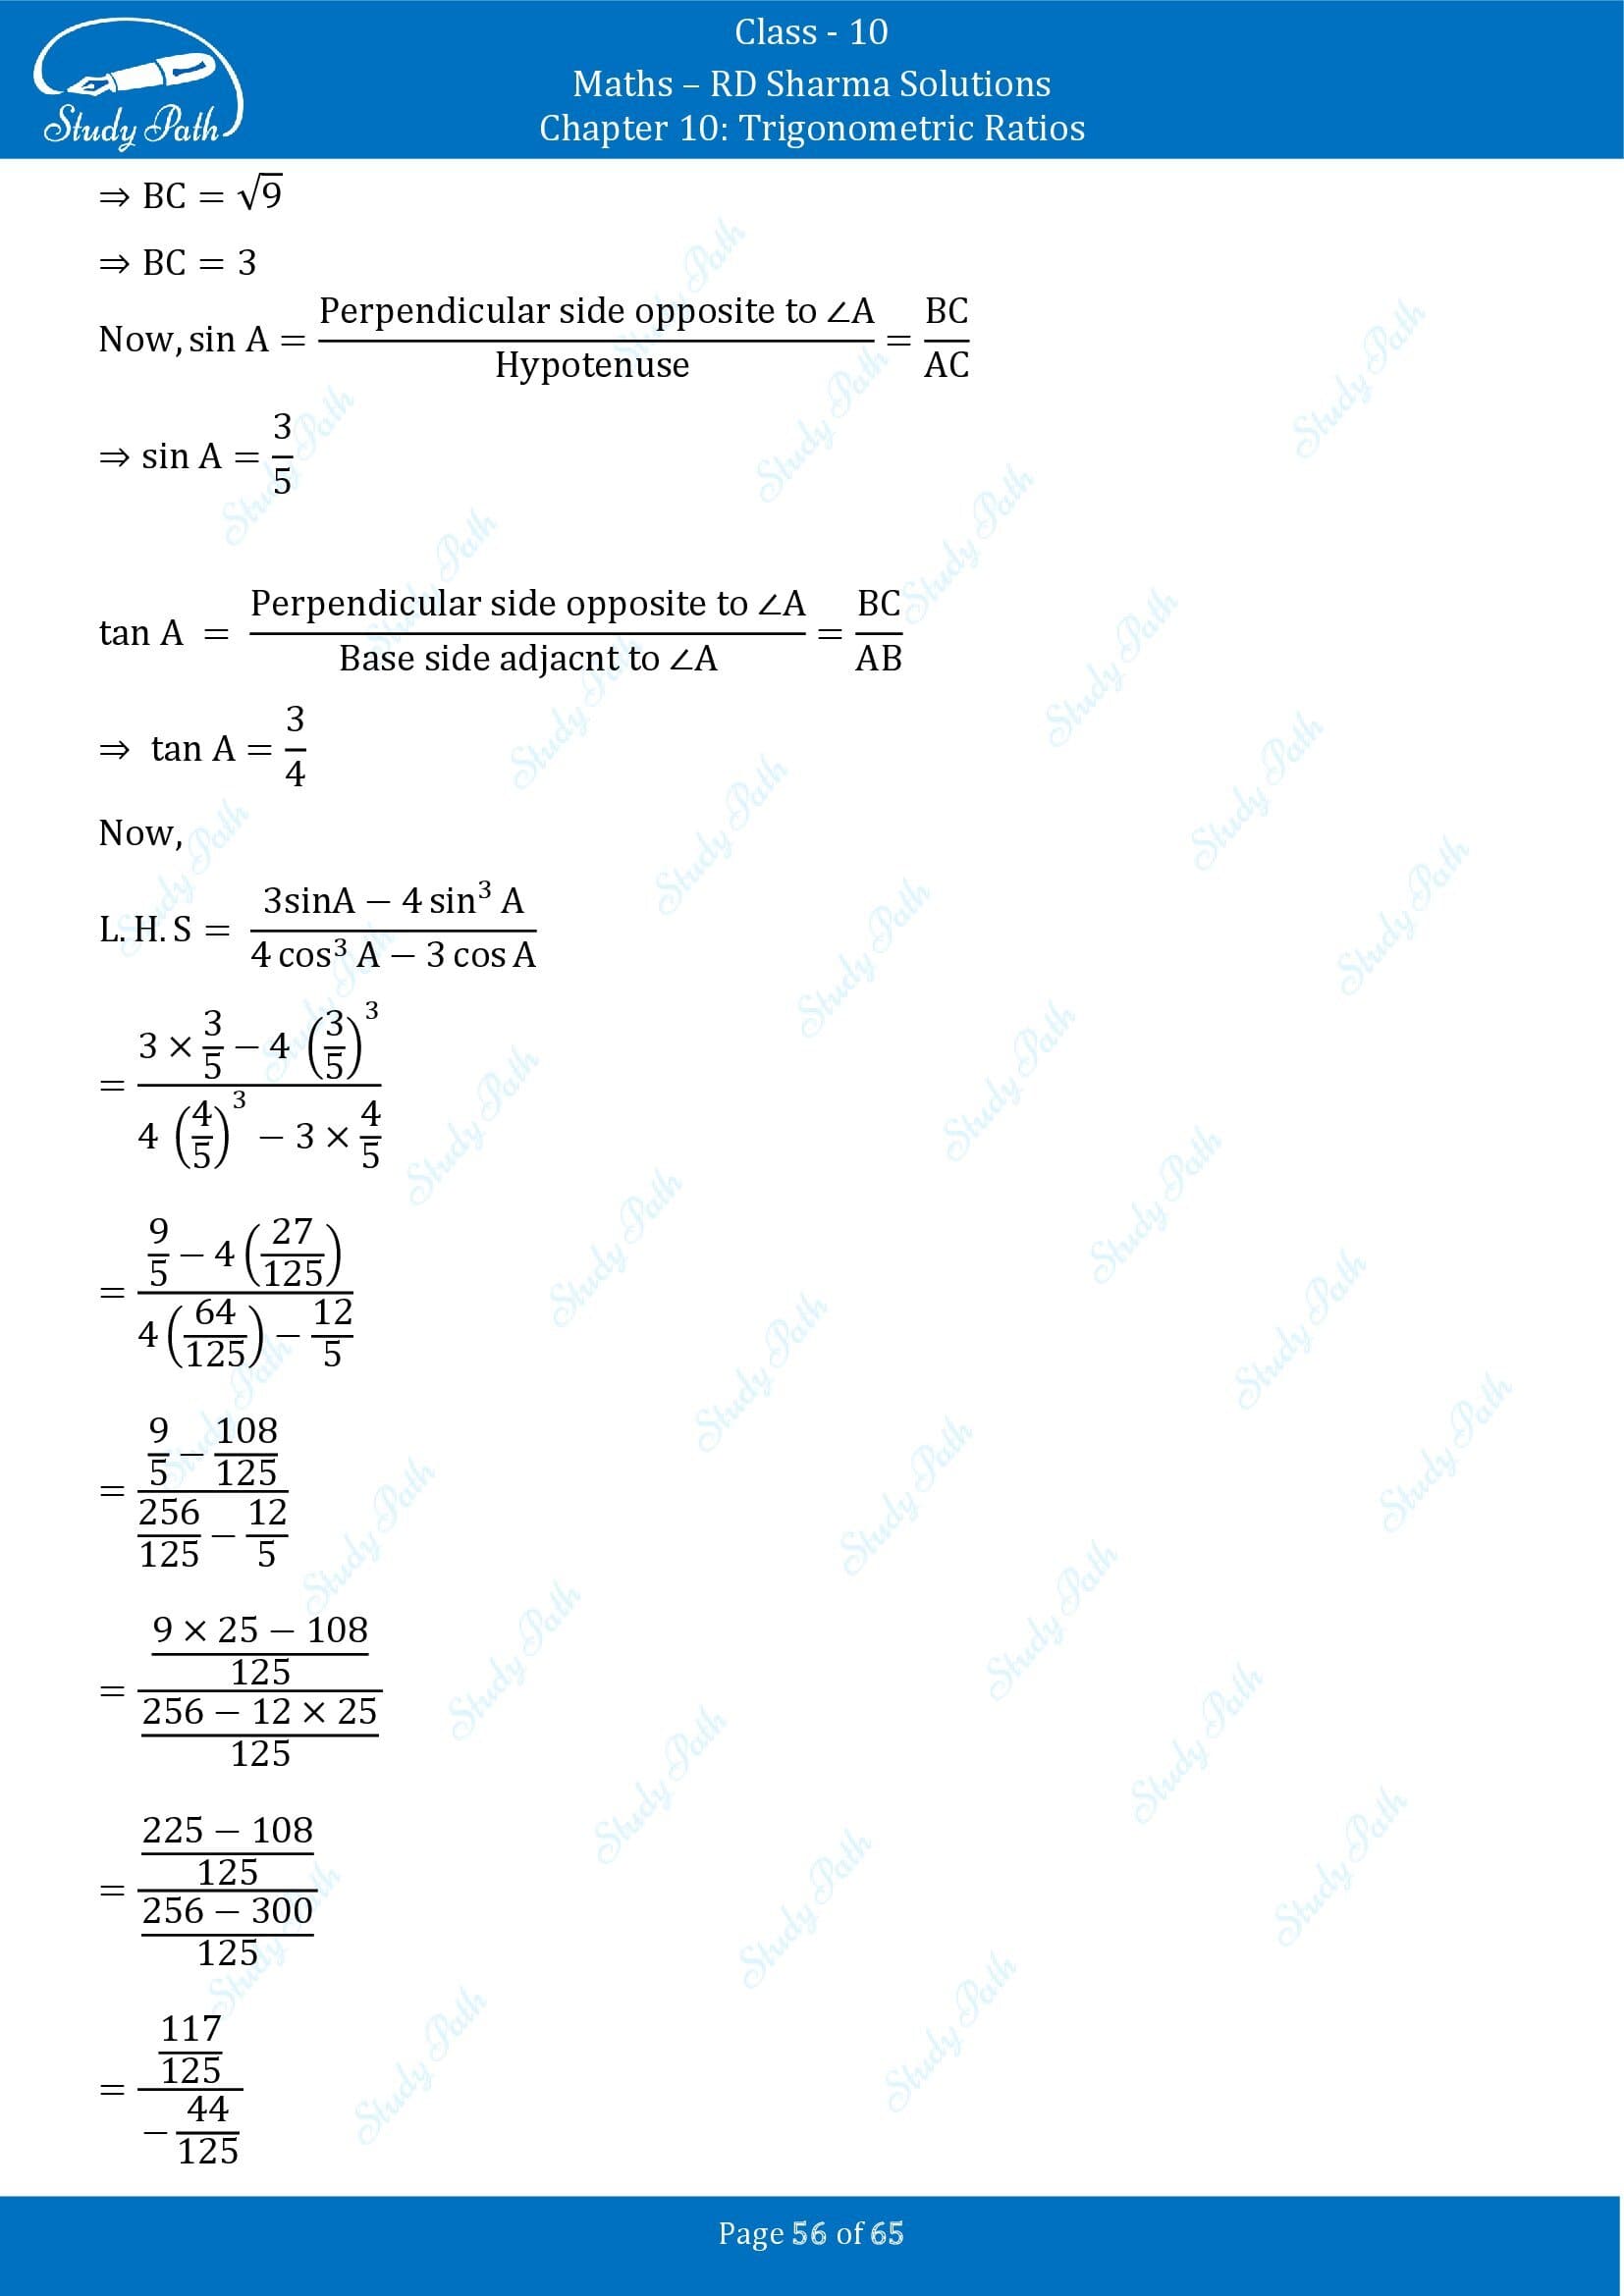 RD Sharma Solutions Class 10 Chapter 10 Trigonometric Ratios Exercise 10.1 00056